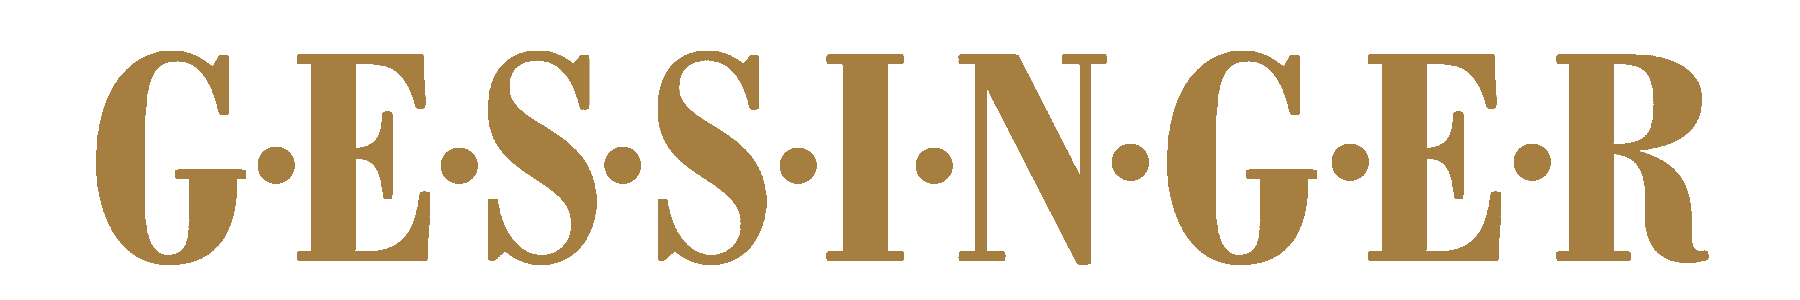 Weingut Gessinger Logo